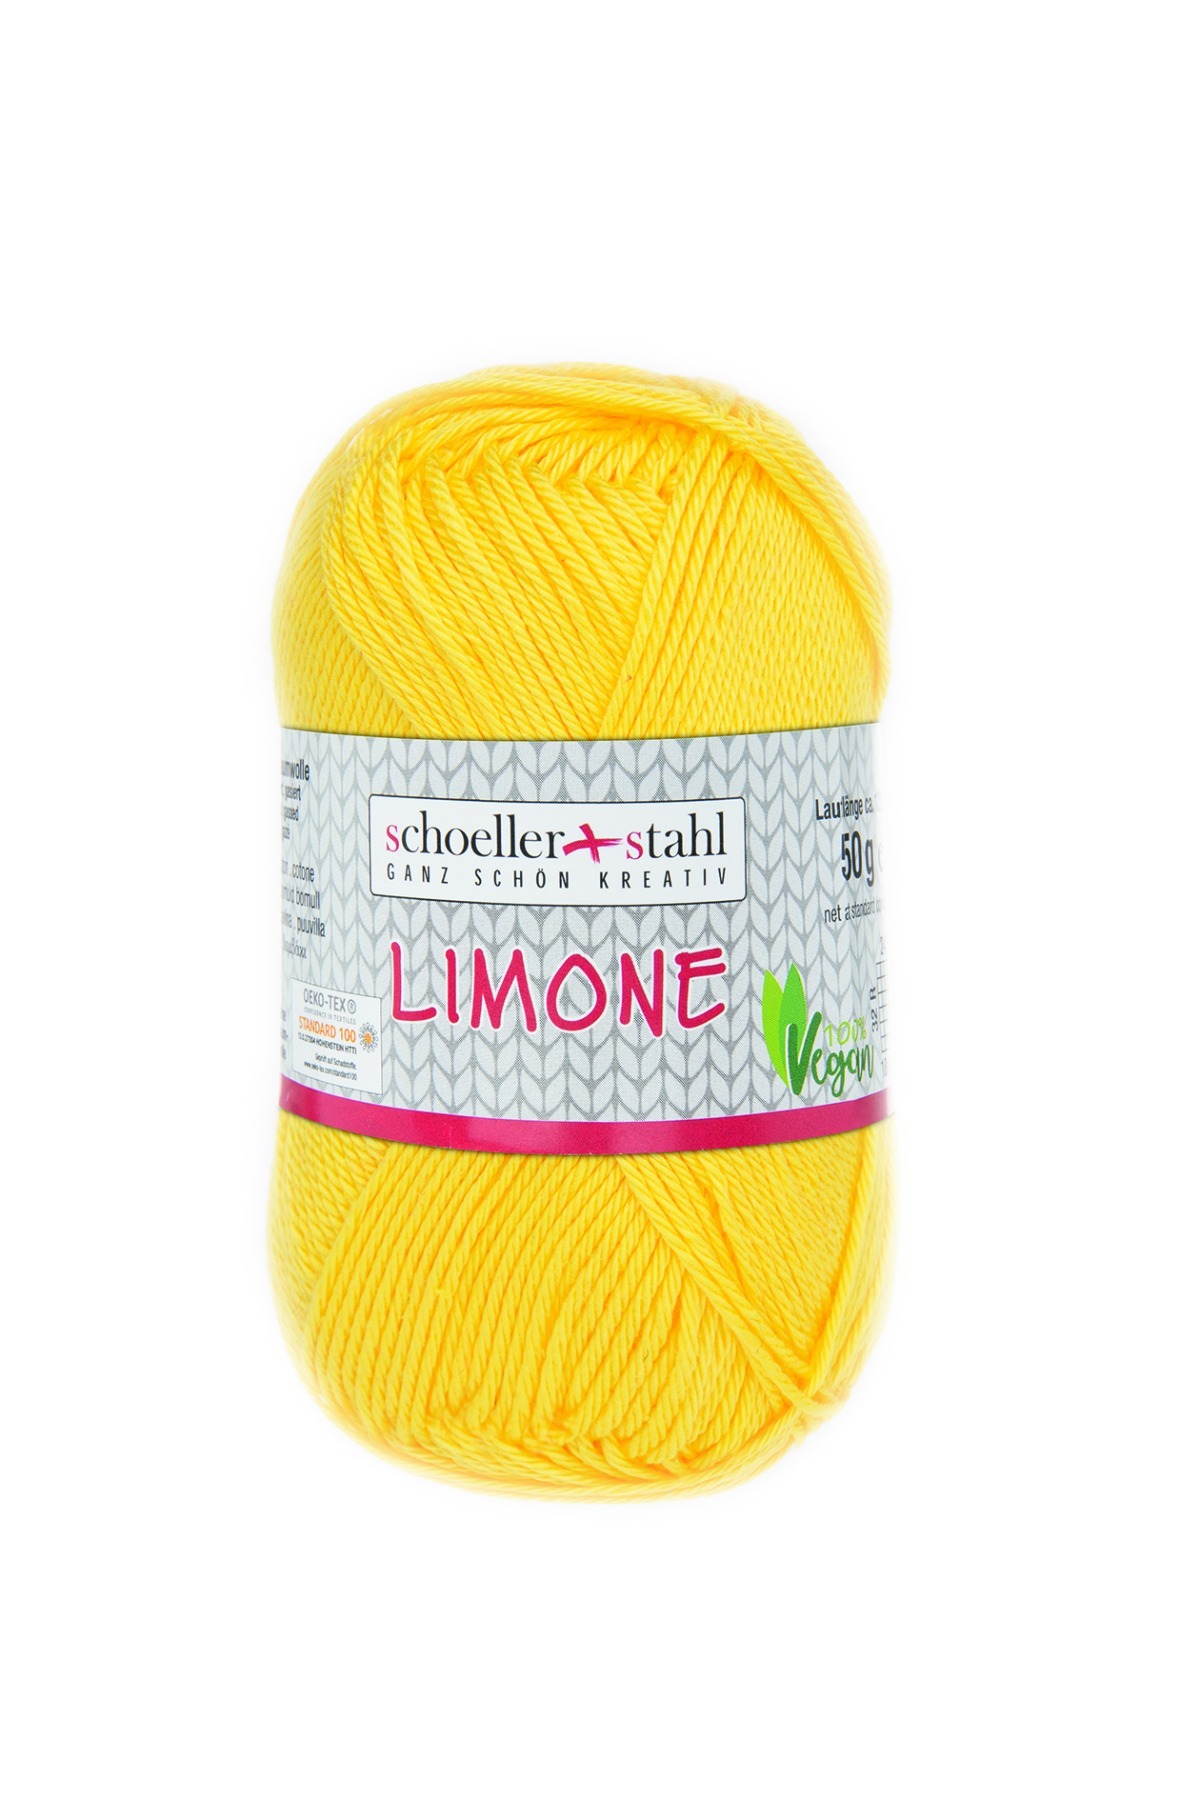 Limone honig 04